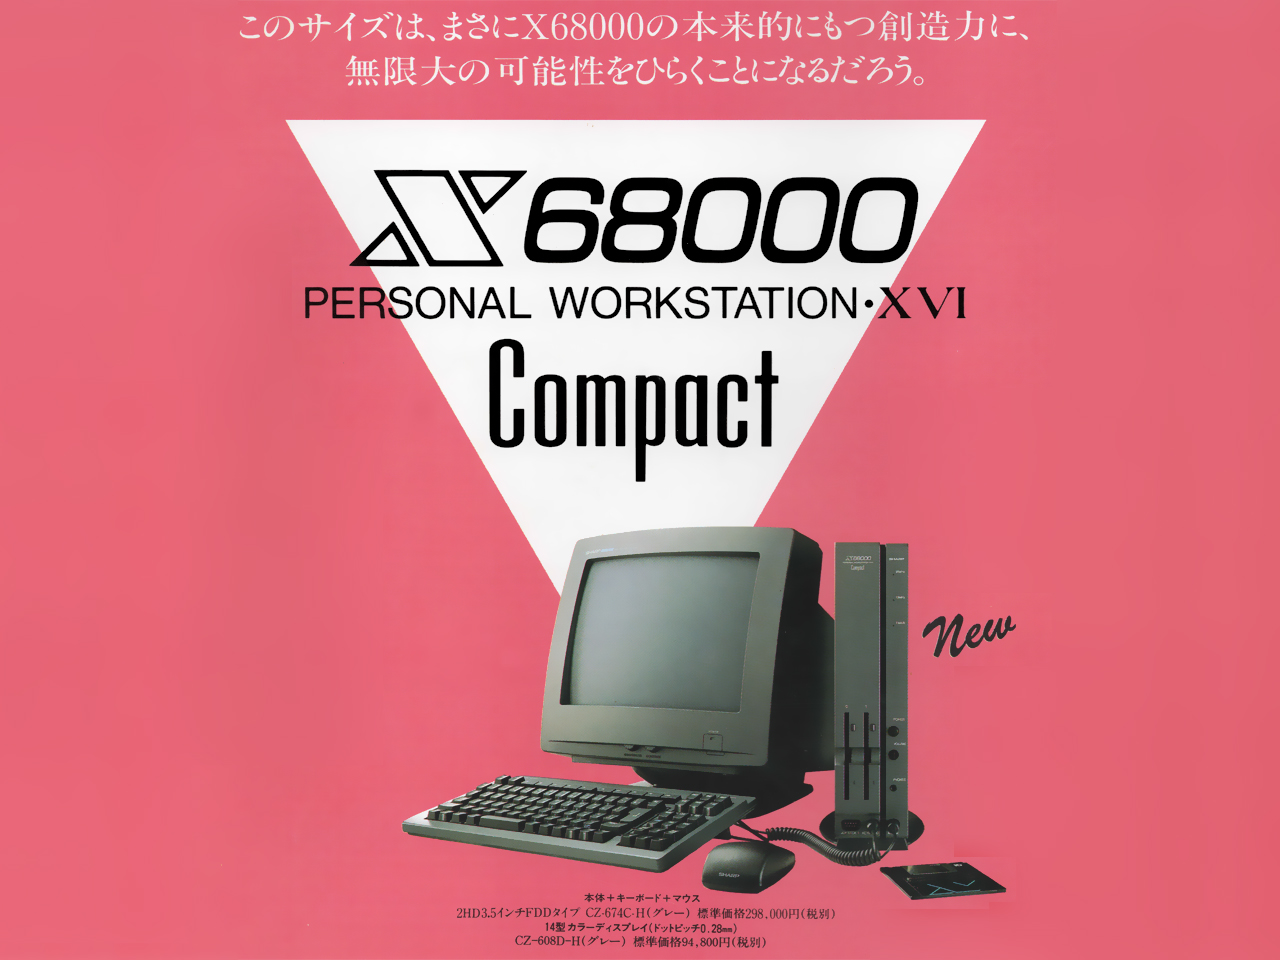 X68000 Compact